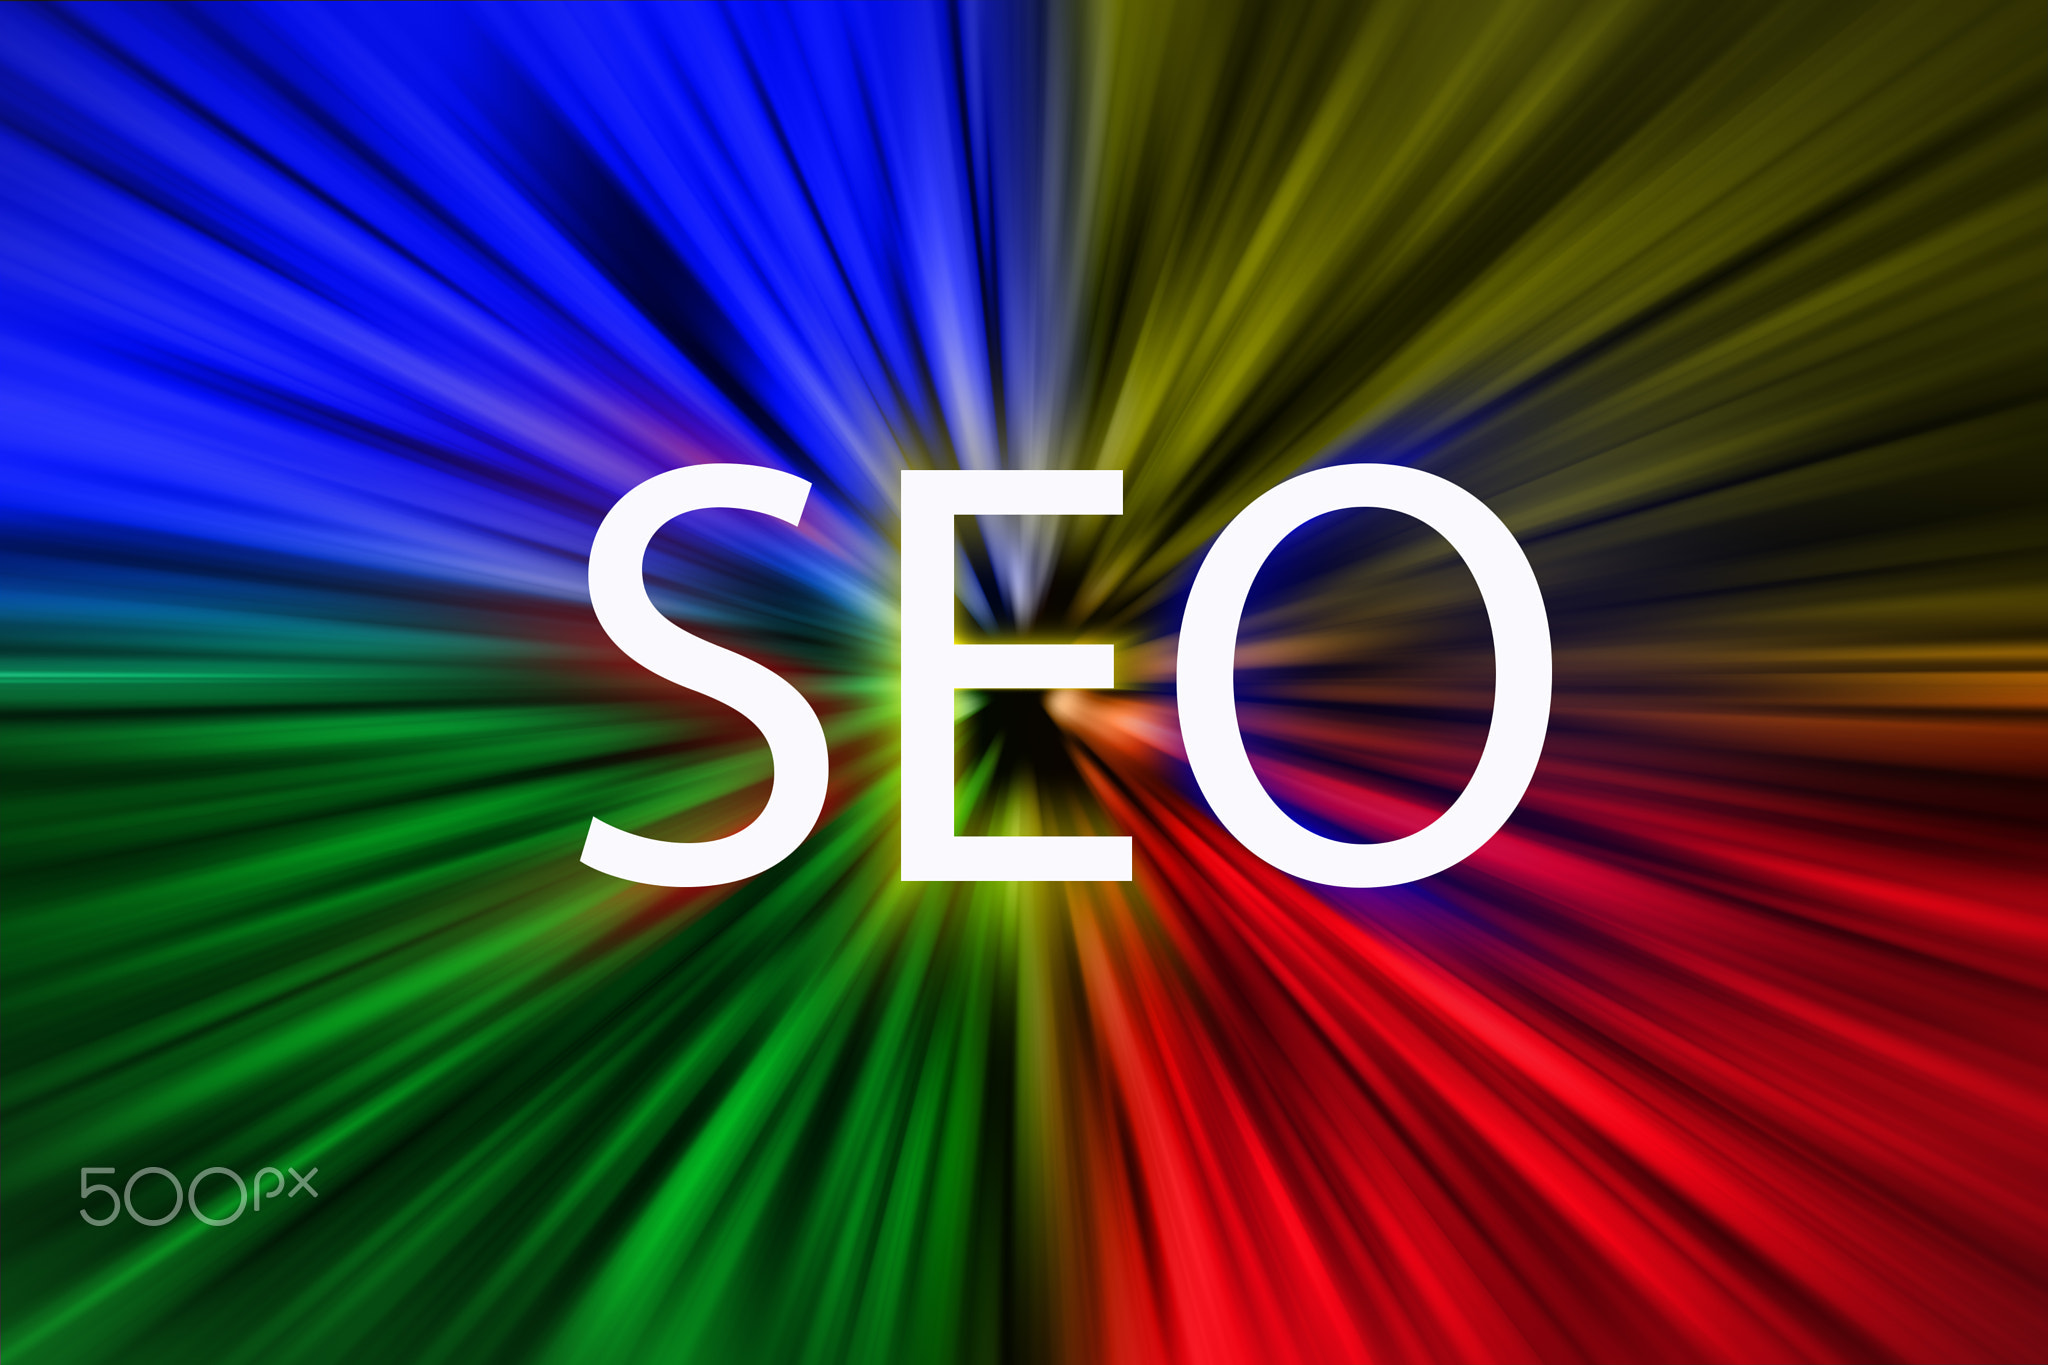 SEO word, Search Engine Optimization. Internet Marketing and Web